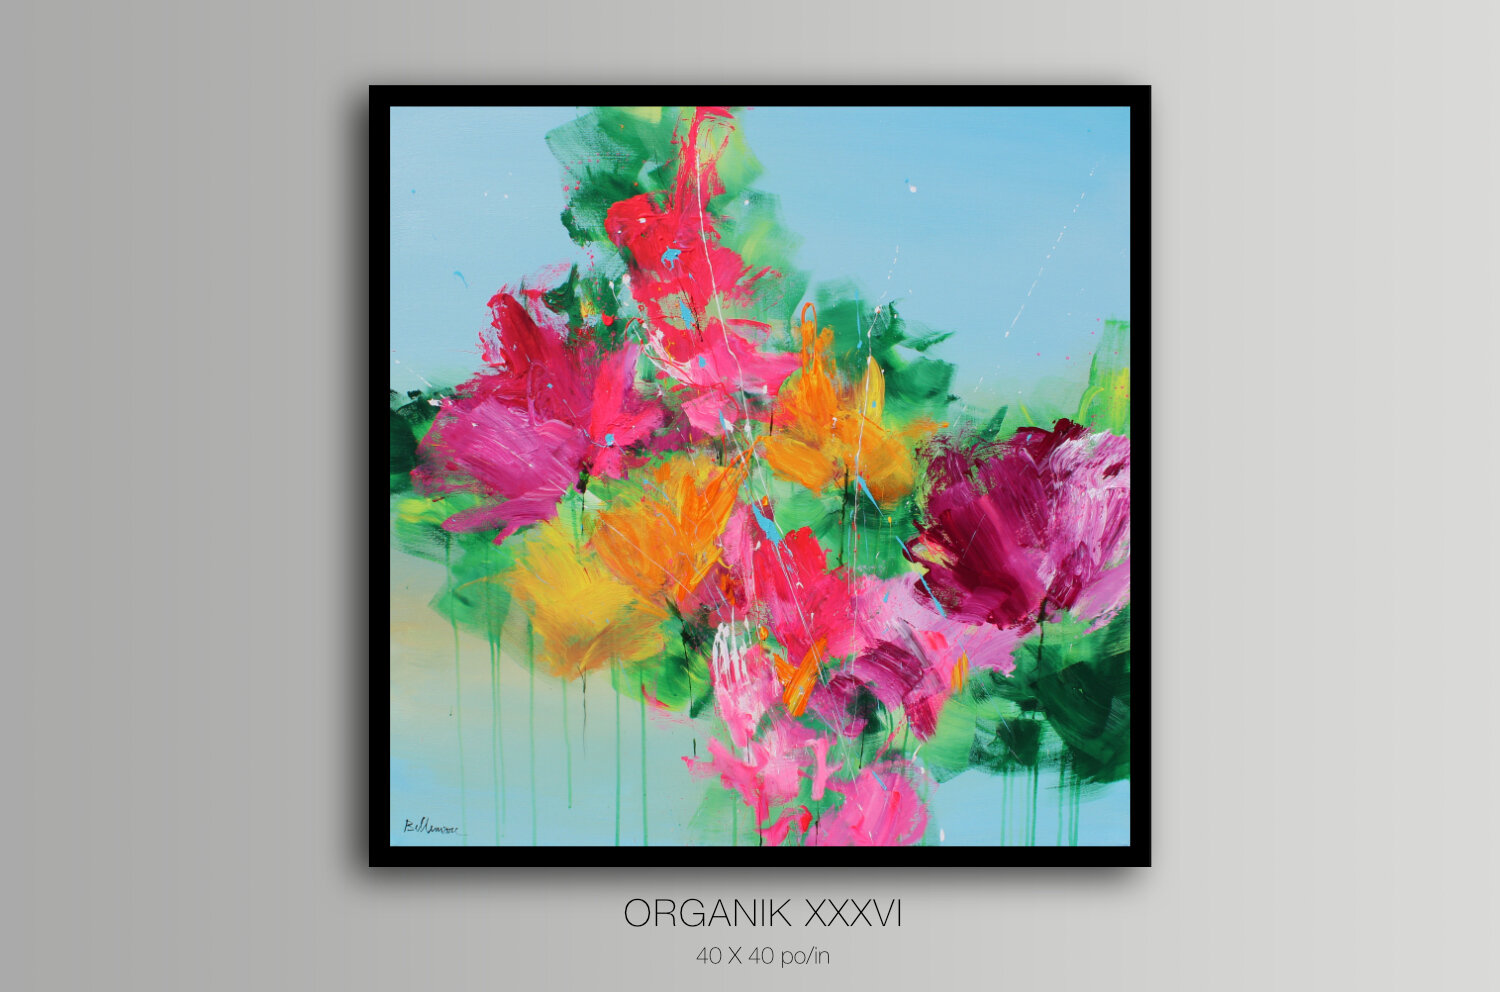 Organik XXXVI - Organik Collection